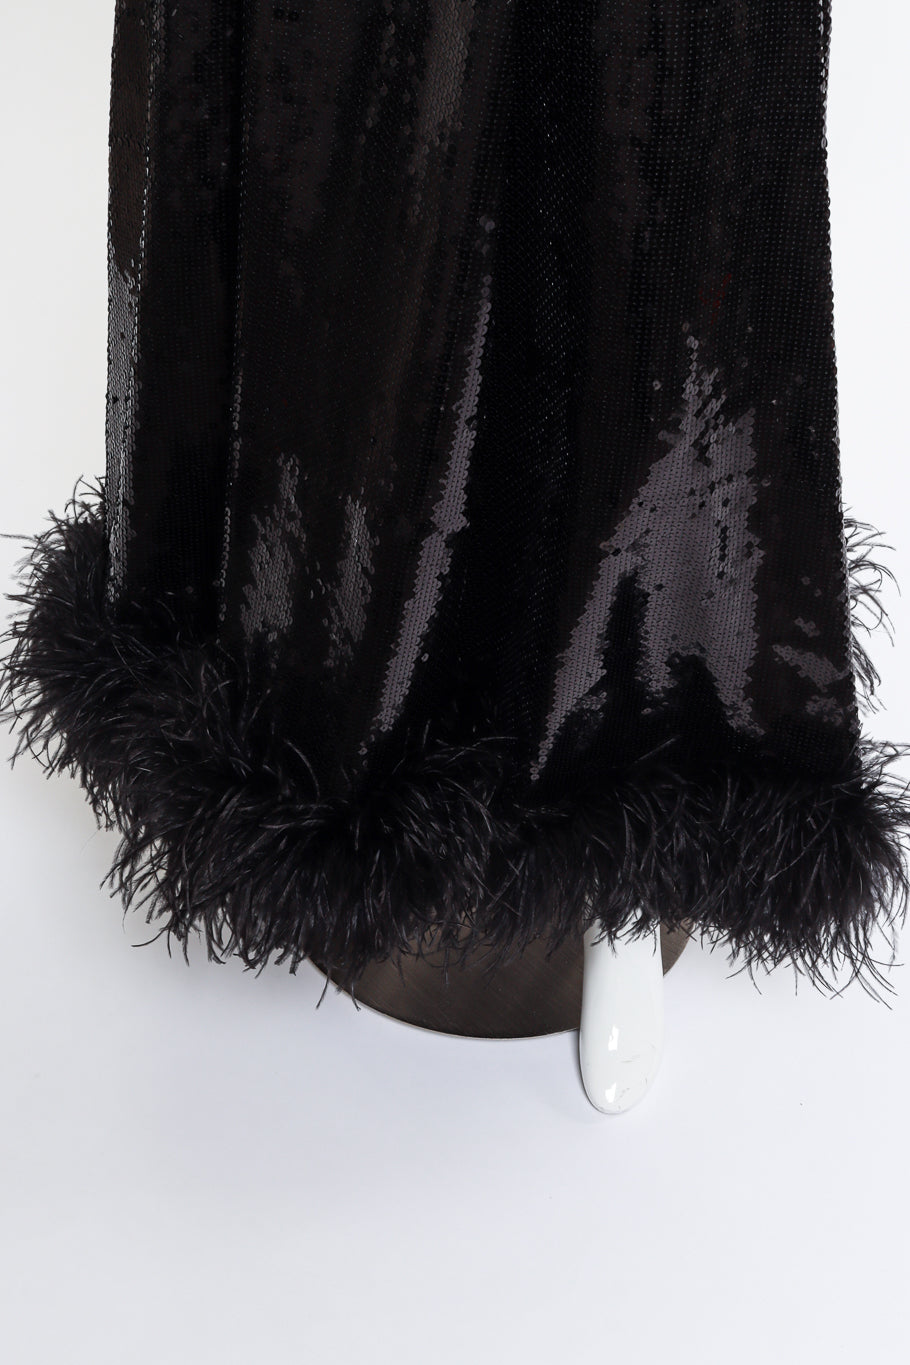 Ostrich Sequin Ballgown by Alexandre Vauhtier trim hem mannequin @RECESS LA